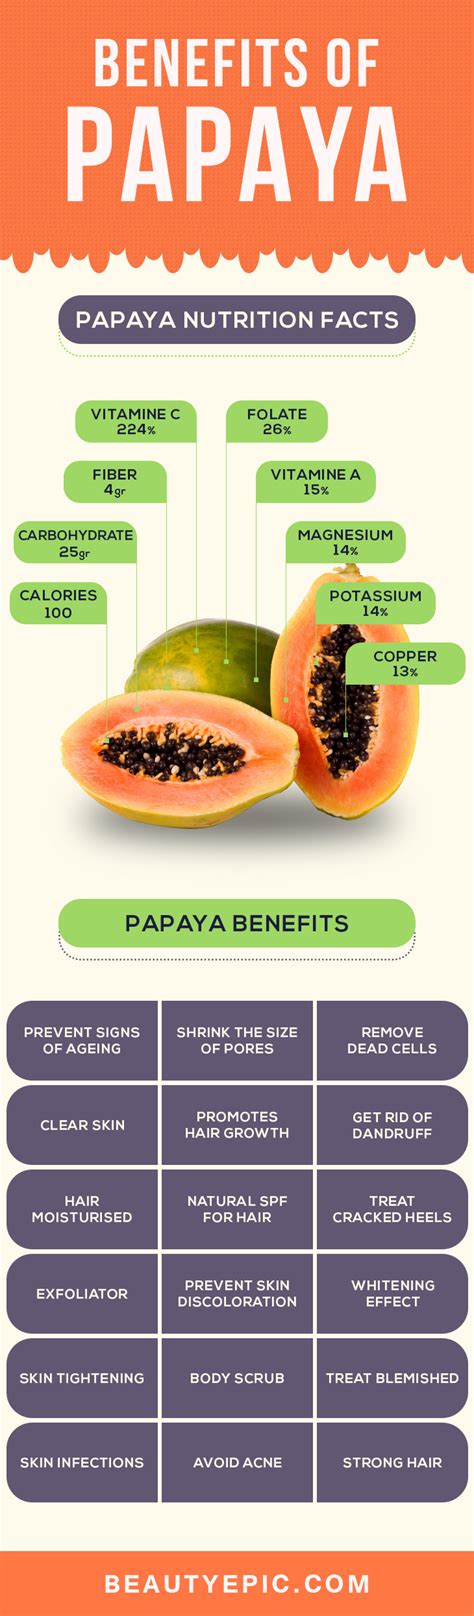 50 Amazing Benefits Of Papaya For Health And Beauty Papaya Benefits